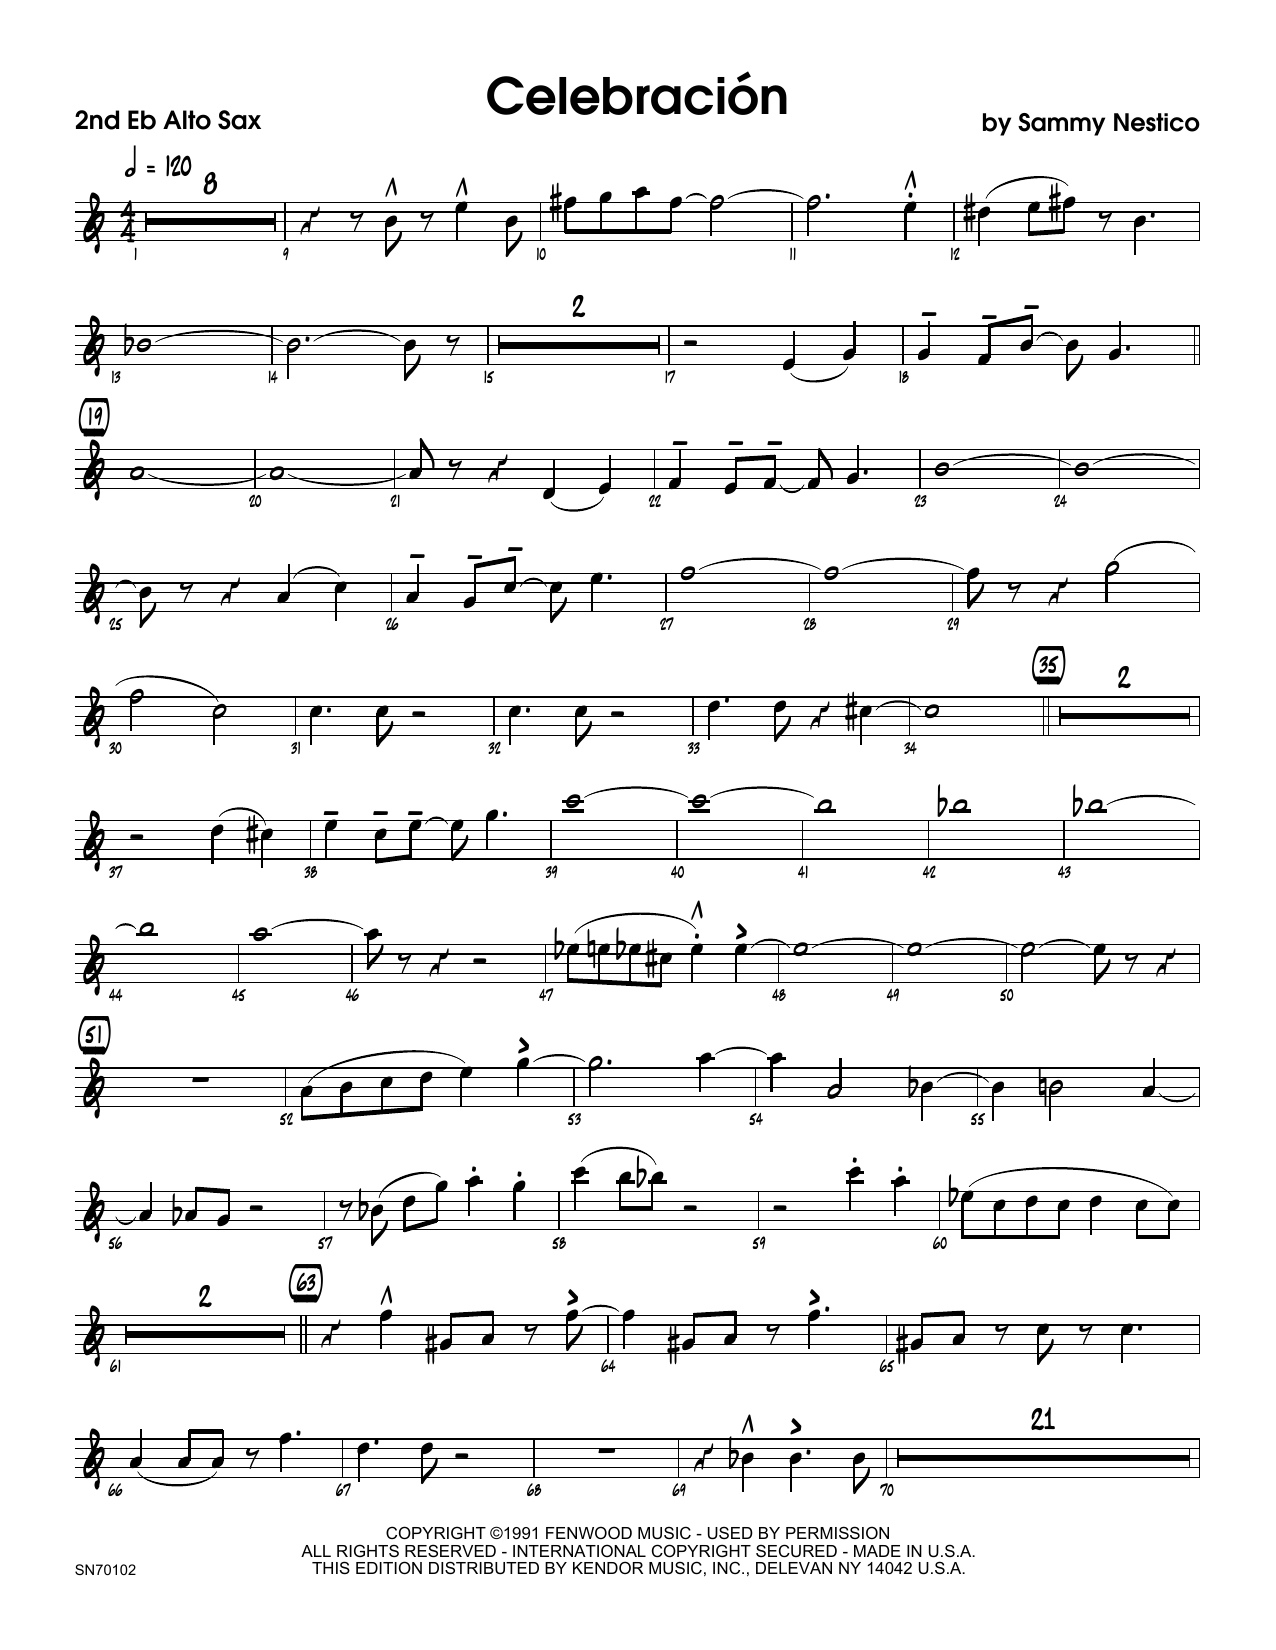 Download Sammy Nestico Celebracion - 2nd Eb Alto Saxophone Sheet Music